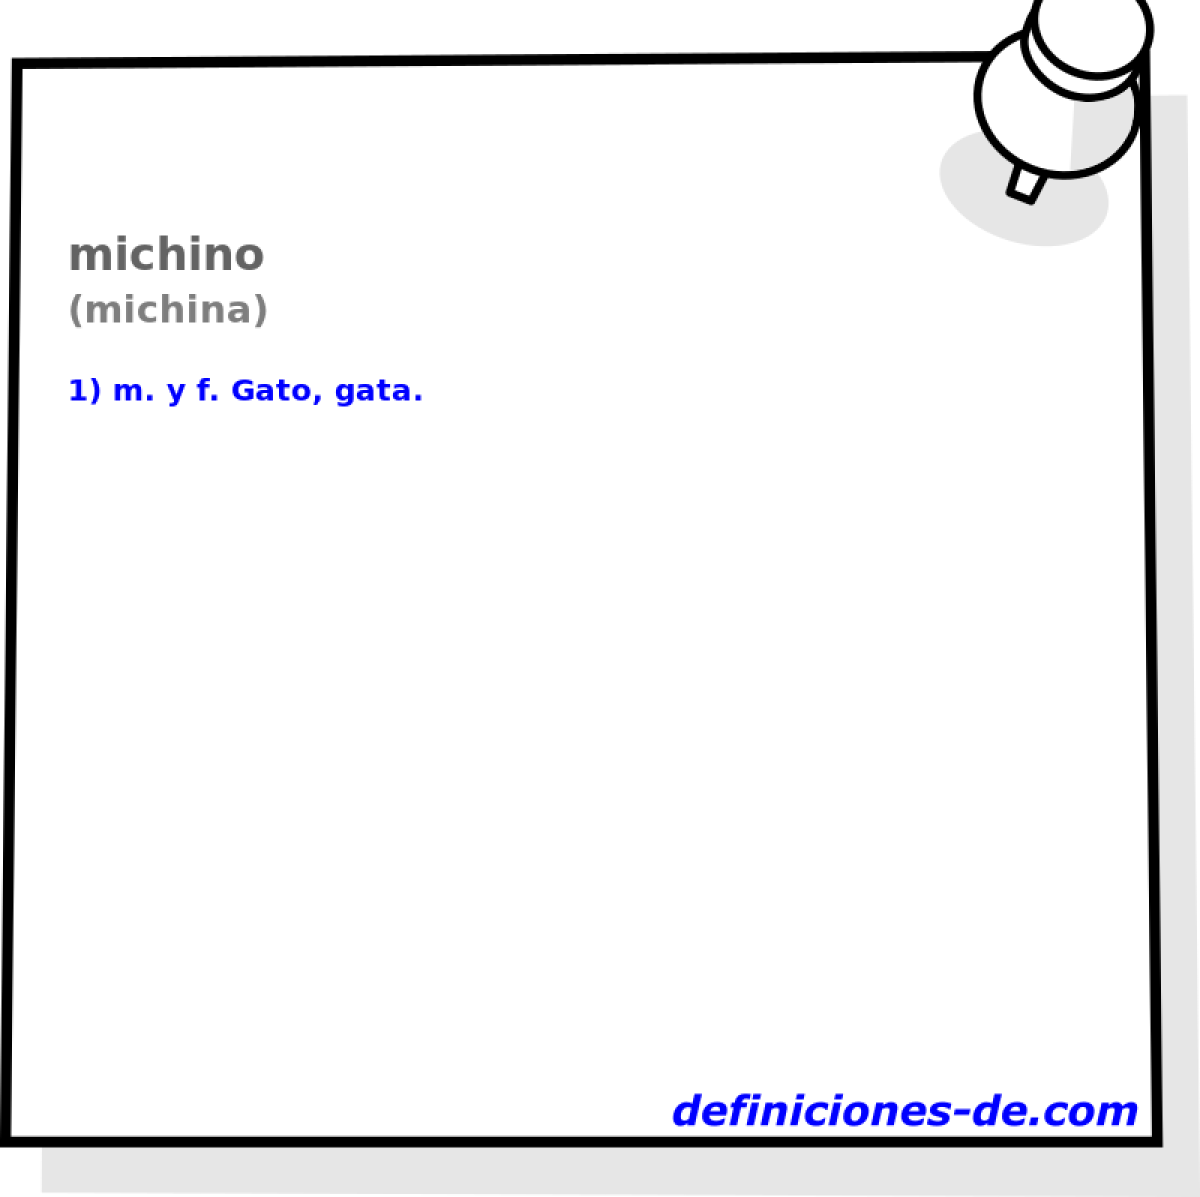 michino (michina)